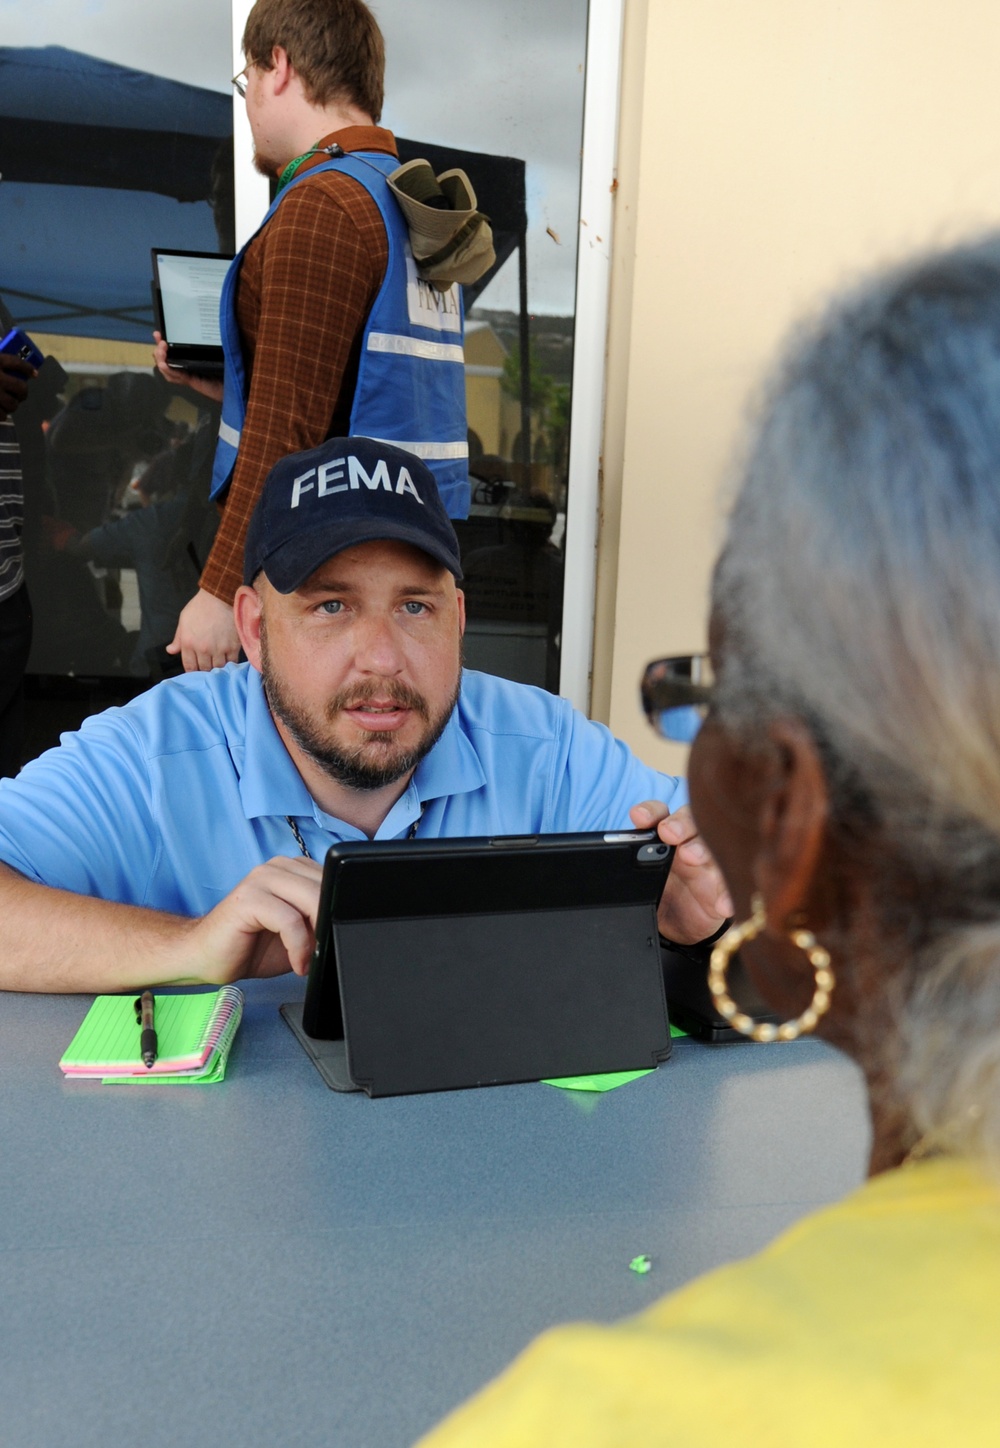 Disaster Survivor Assistance Team Members Help Register Local for FEMA Assistance